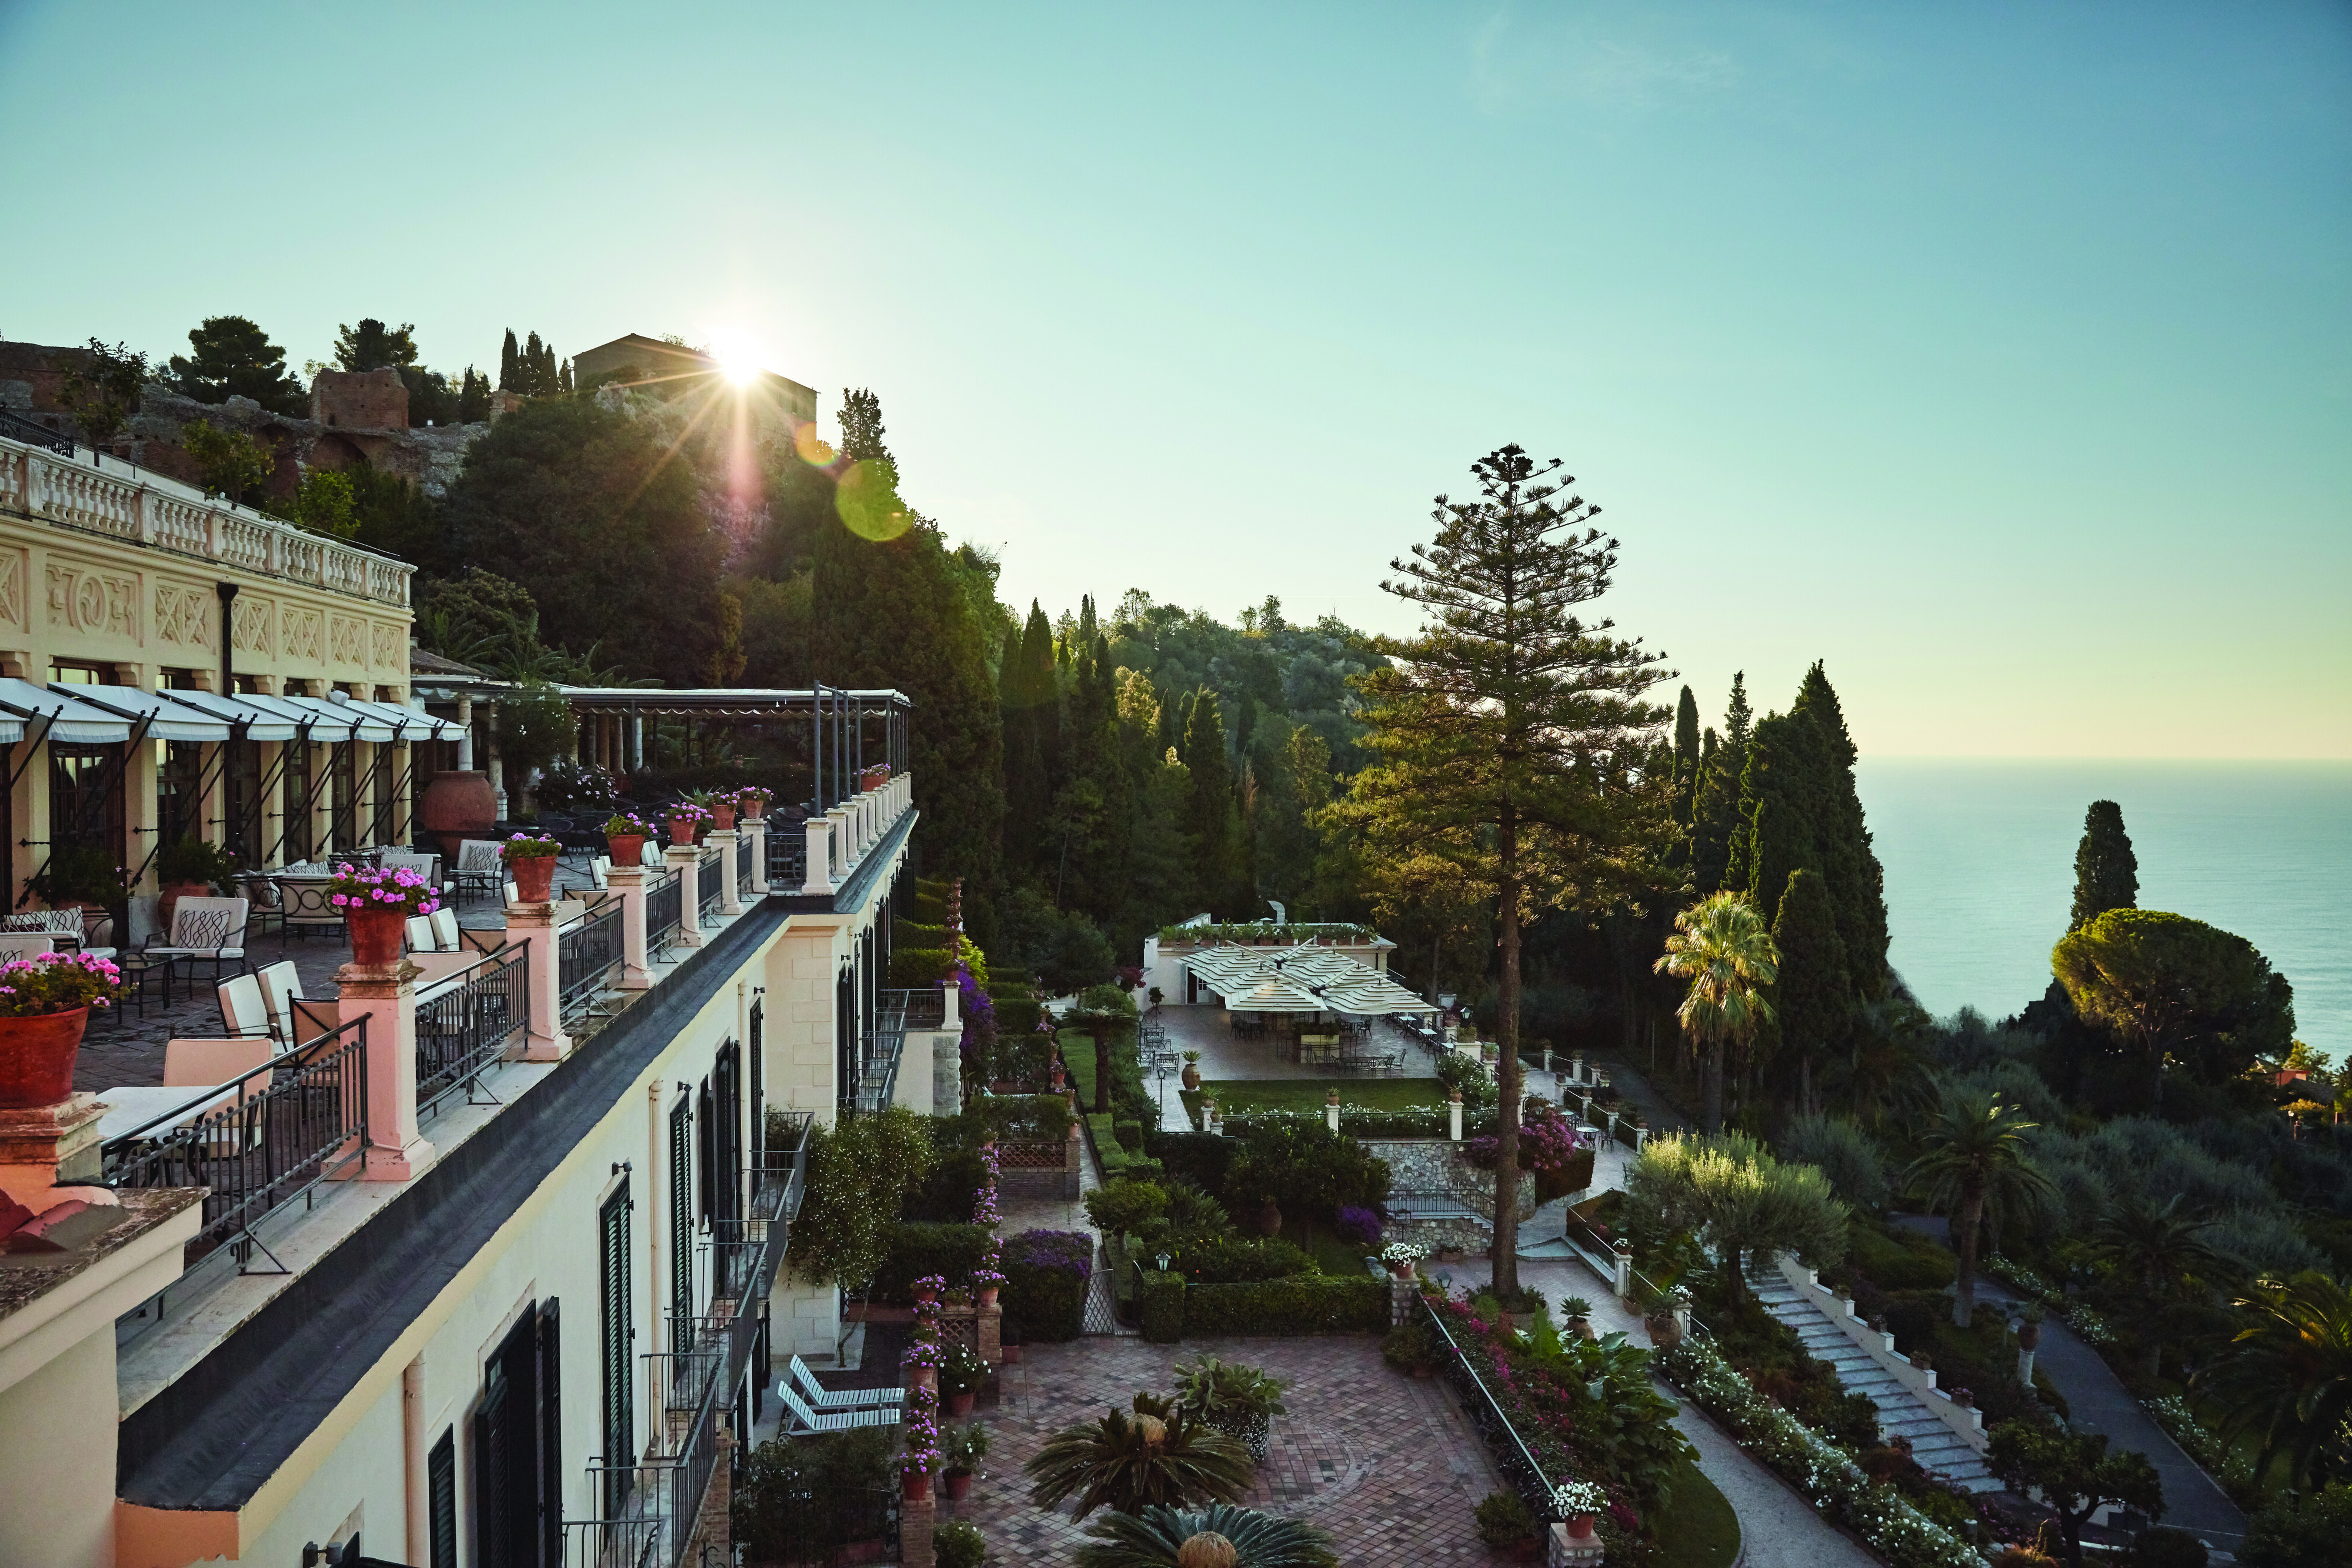 Grand Hotel Timeo, A Belmond Hotel, Taormina celebrates 150 years